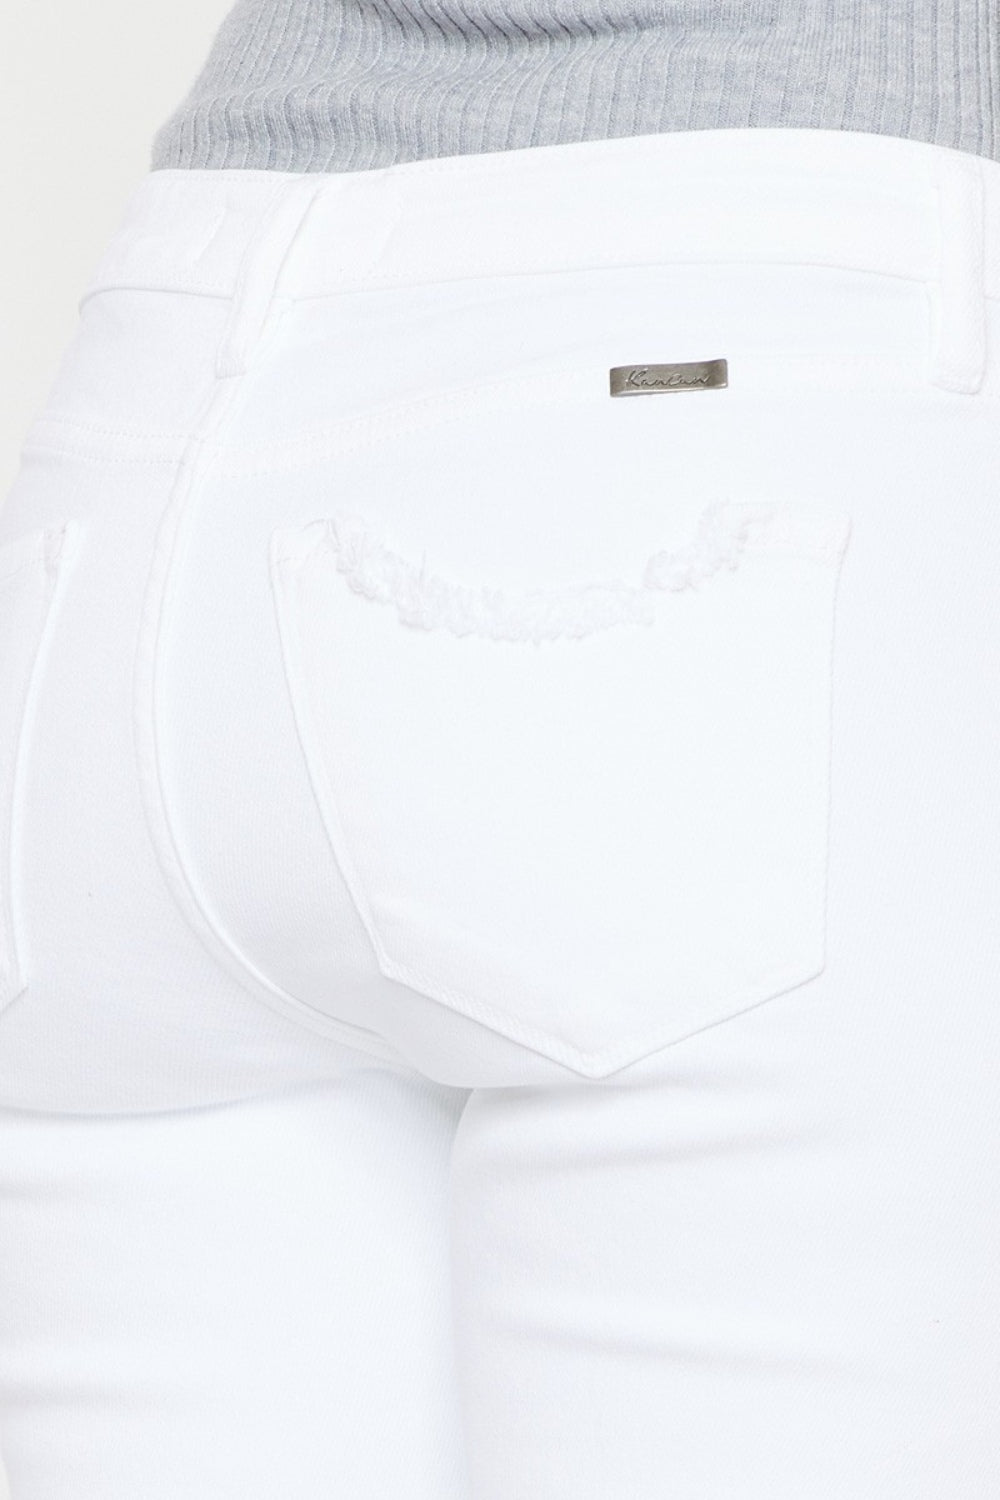 KanCan Skinny Mid-Rise Stretch Slim Raw Hem Ankle Distressed Jeans White Denim Pants